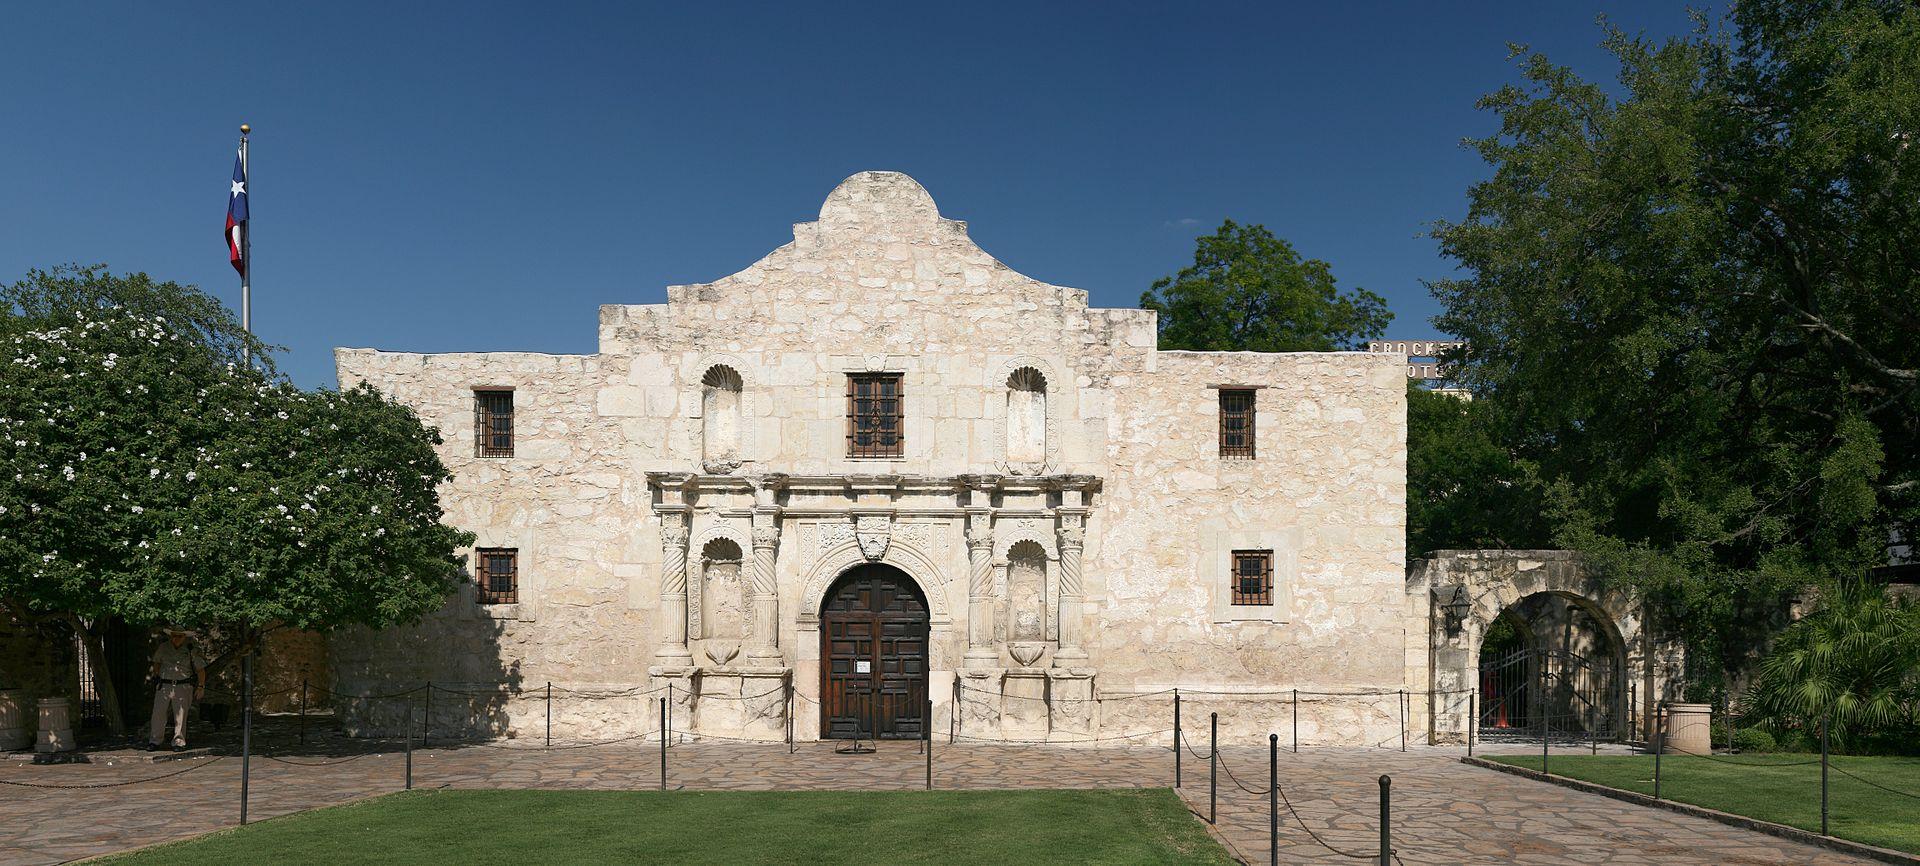 The chapel of the Alamo, San Antonio, Texas